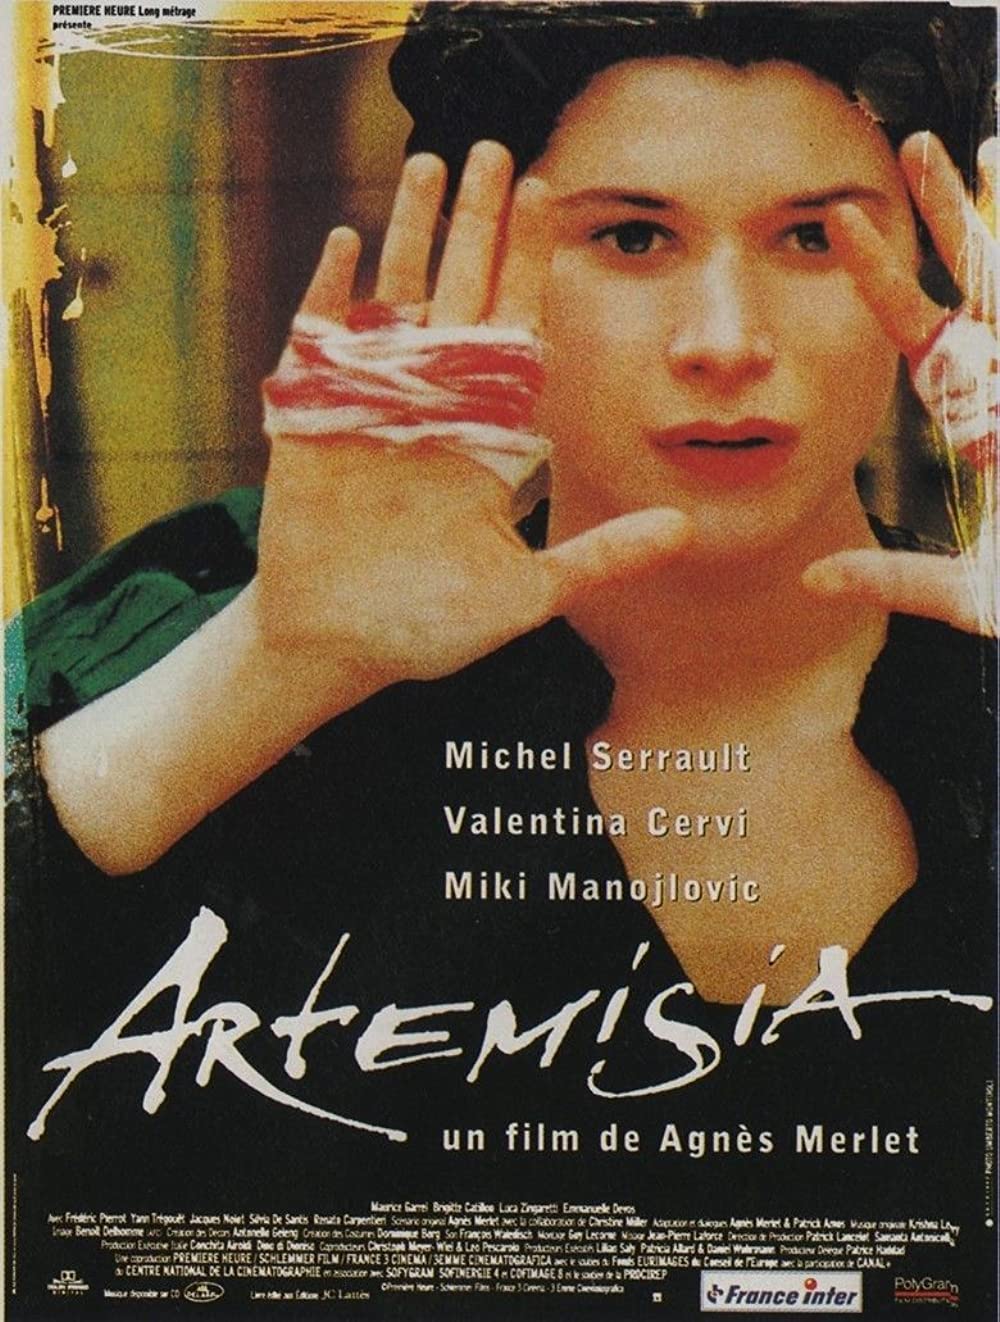 Filmbeschreibung zu Artemisia